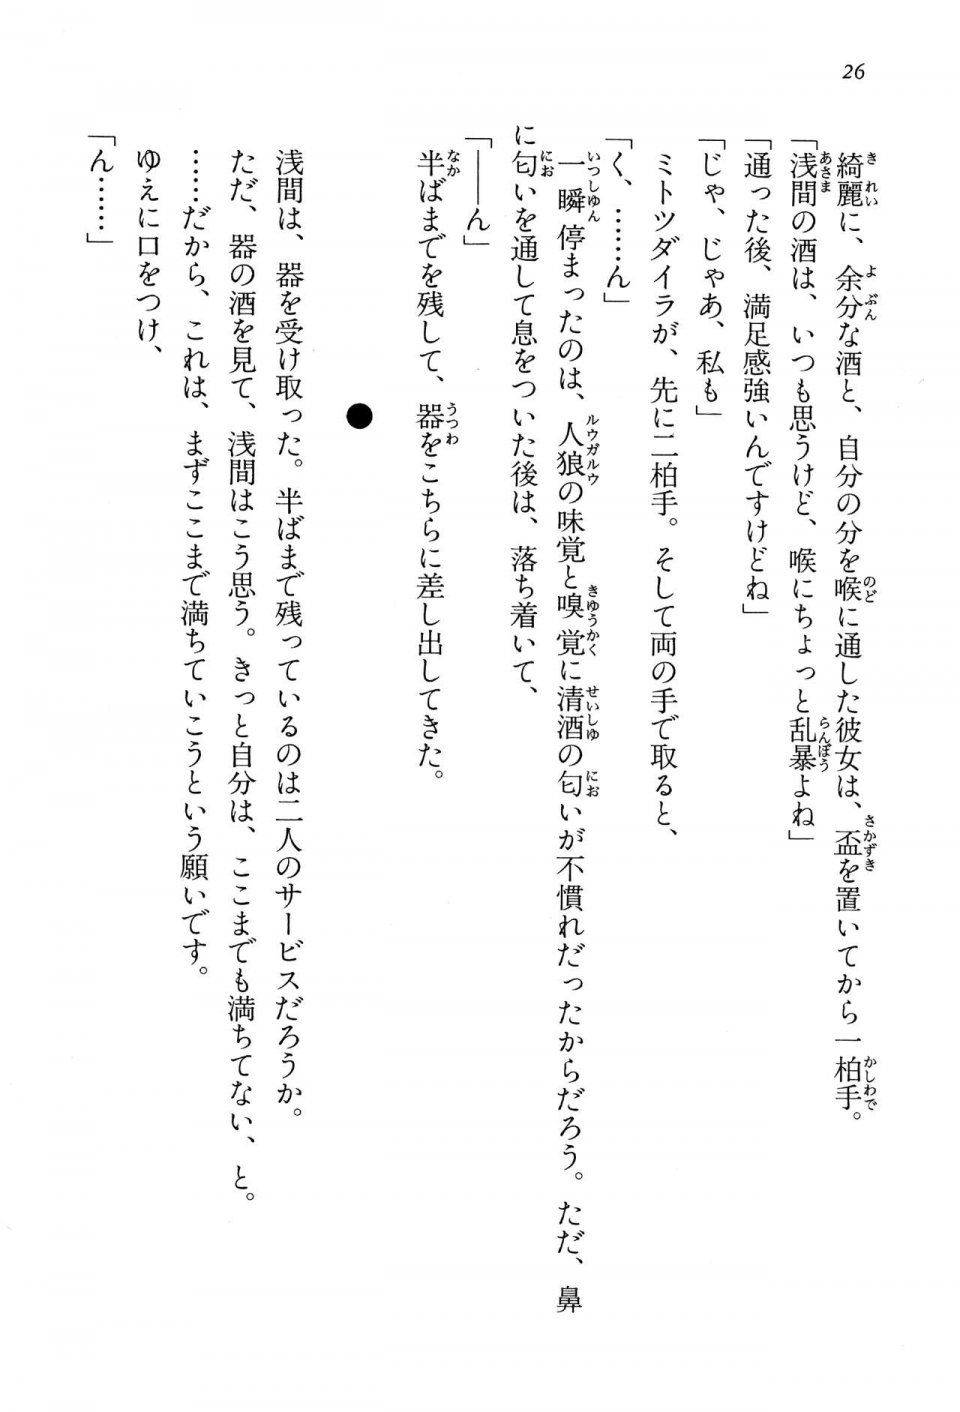 Kyoukai Senjou no Horizon BD Special Mininovel Vol 5(3A) - Photo #30